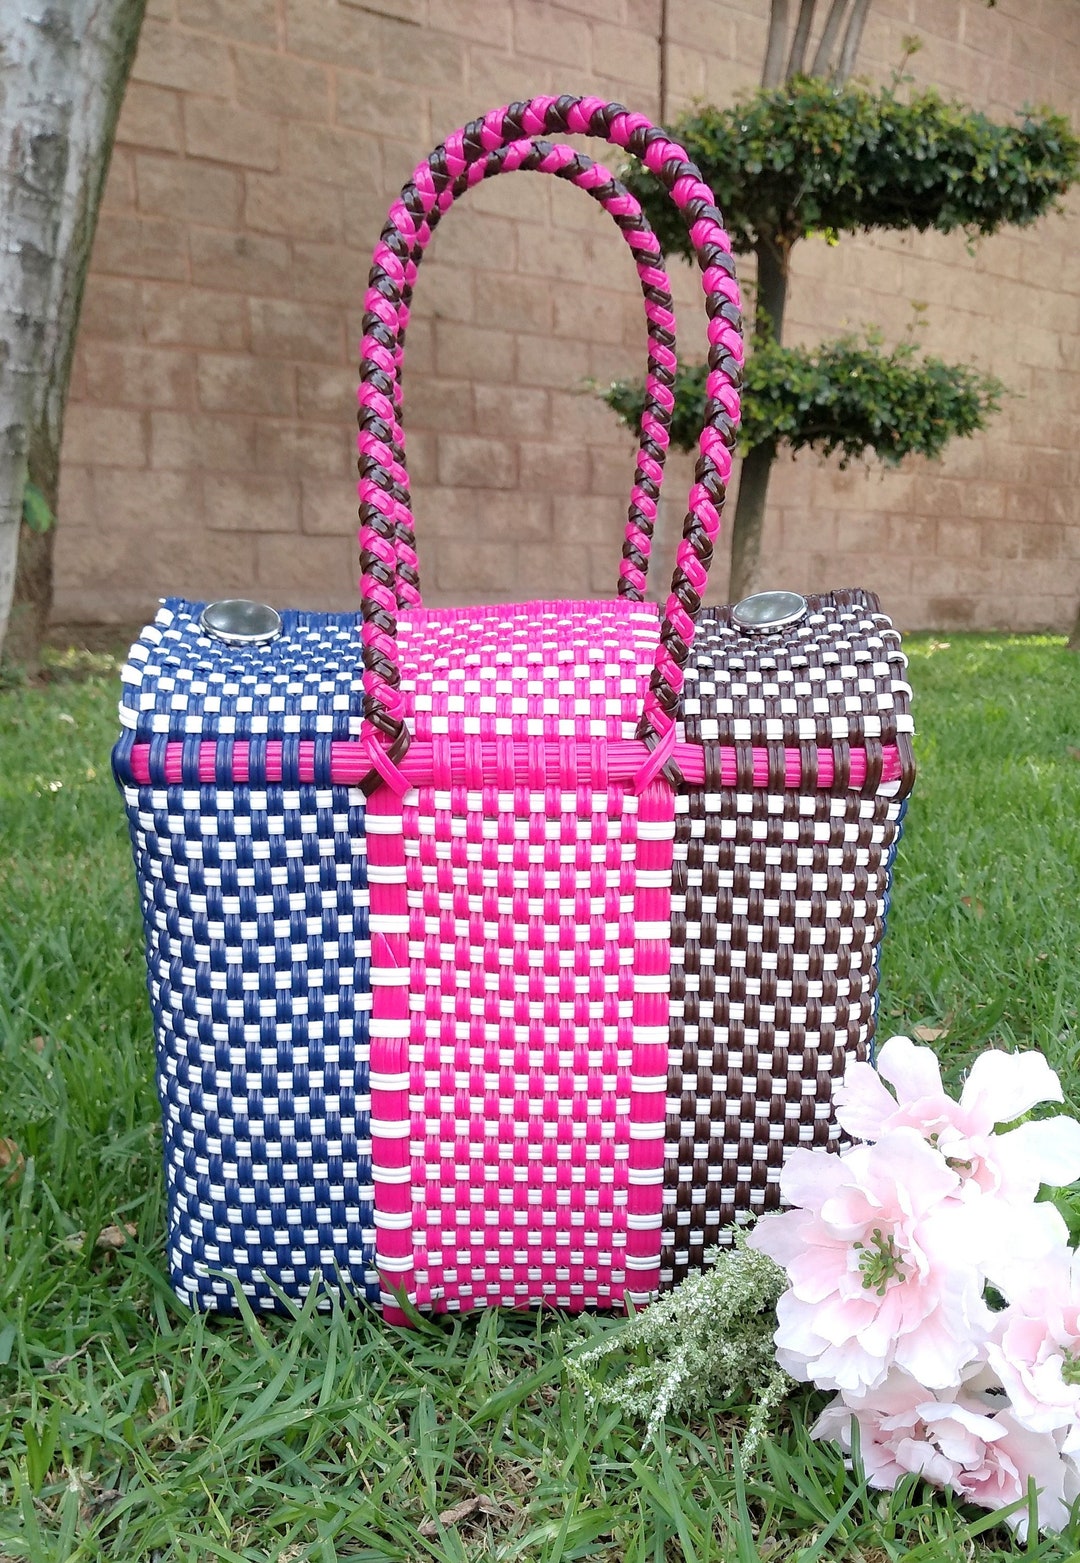 Handmade plastic bag small - handycraft bag - Mexican lunch bag for women -  Summer bag - Beach bag - craft bag - handmade lunch box